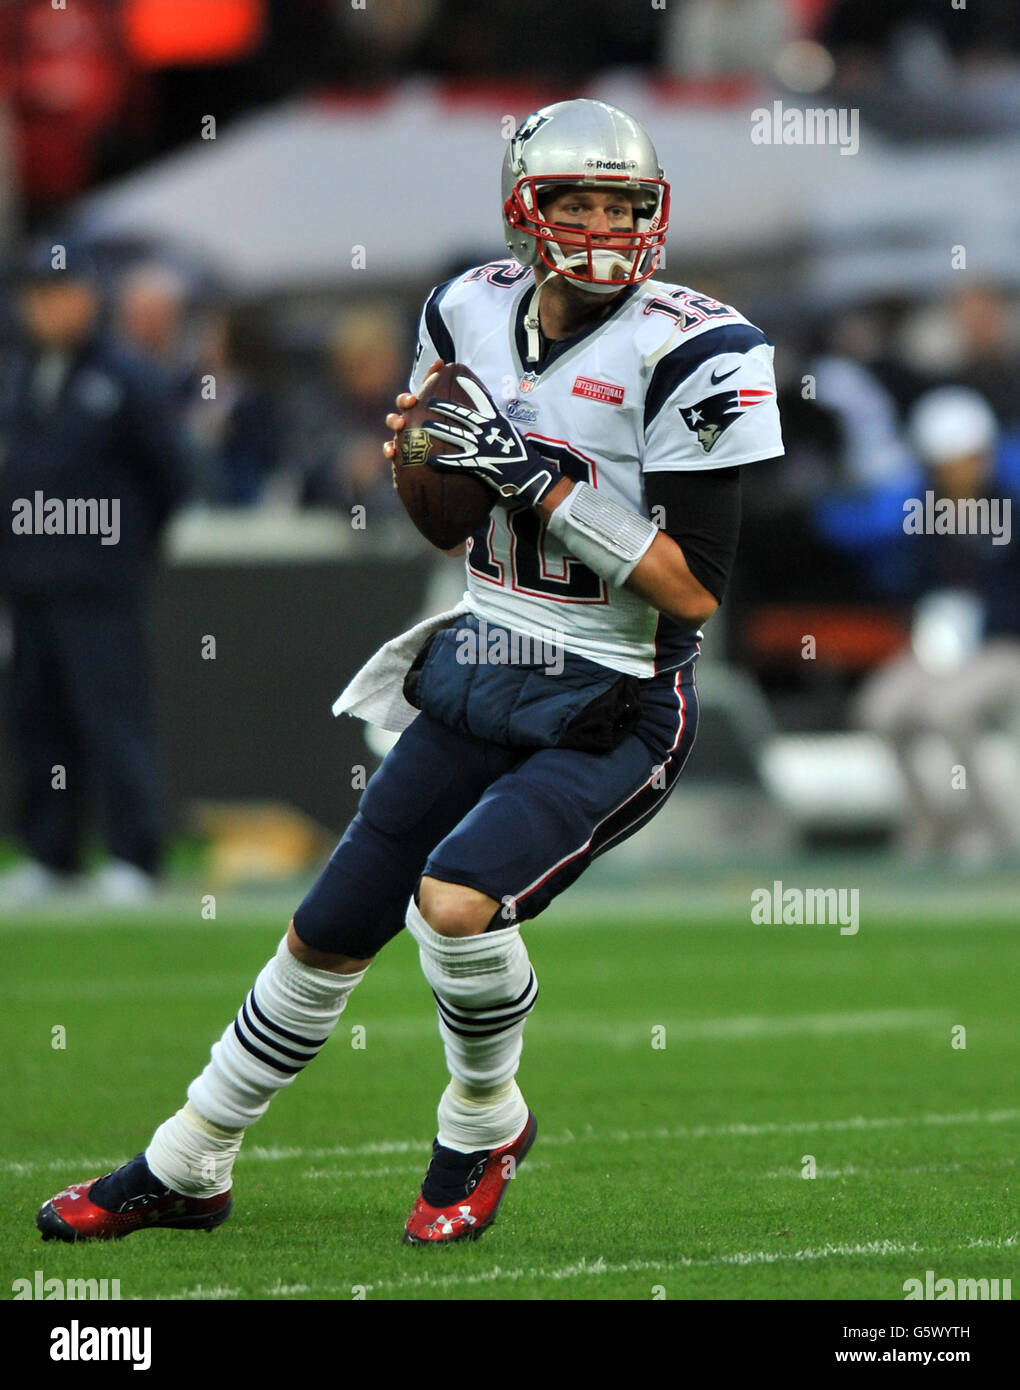 American Football - NFL International Series 2012 - St Louis Rams v New England Patriots - Wembley Stadium. Tom Brady, New England Patriots Quarter Back Stock Photo